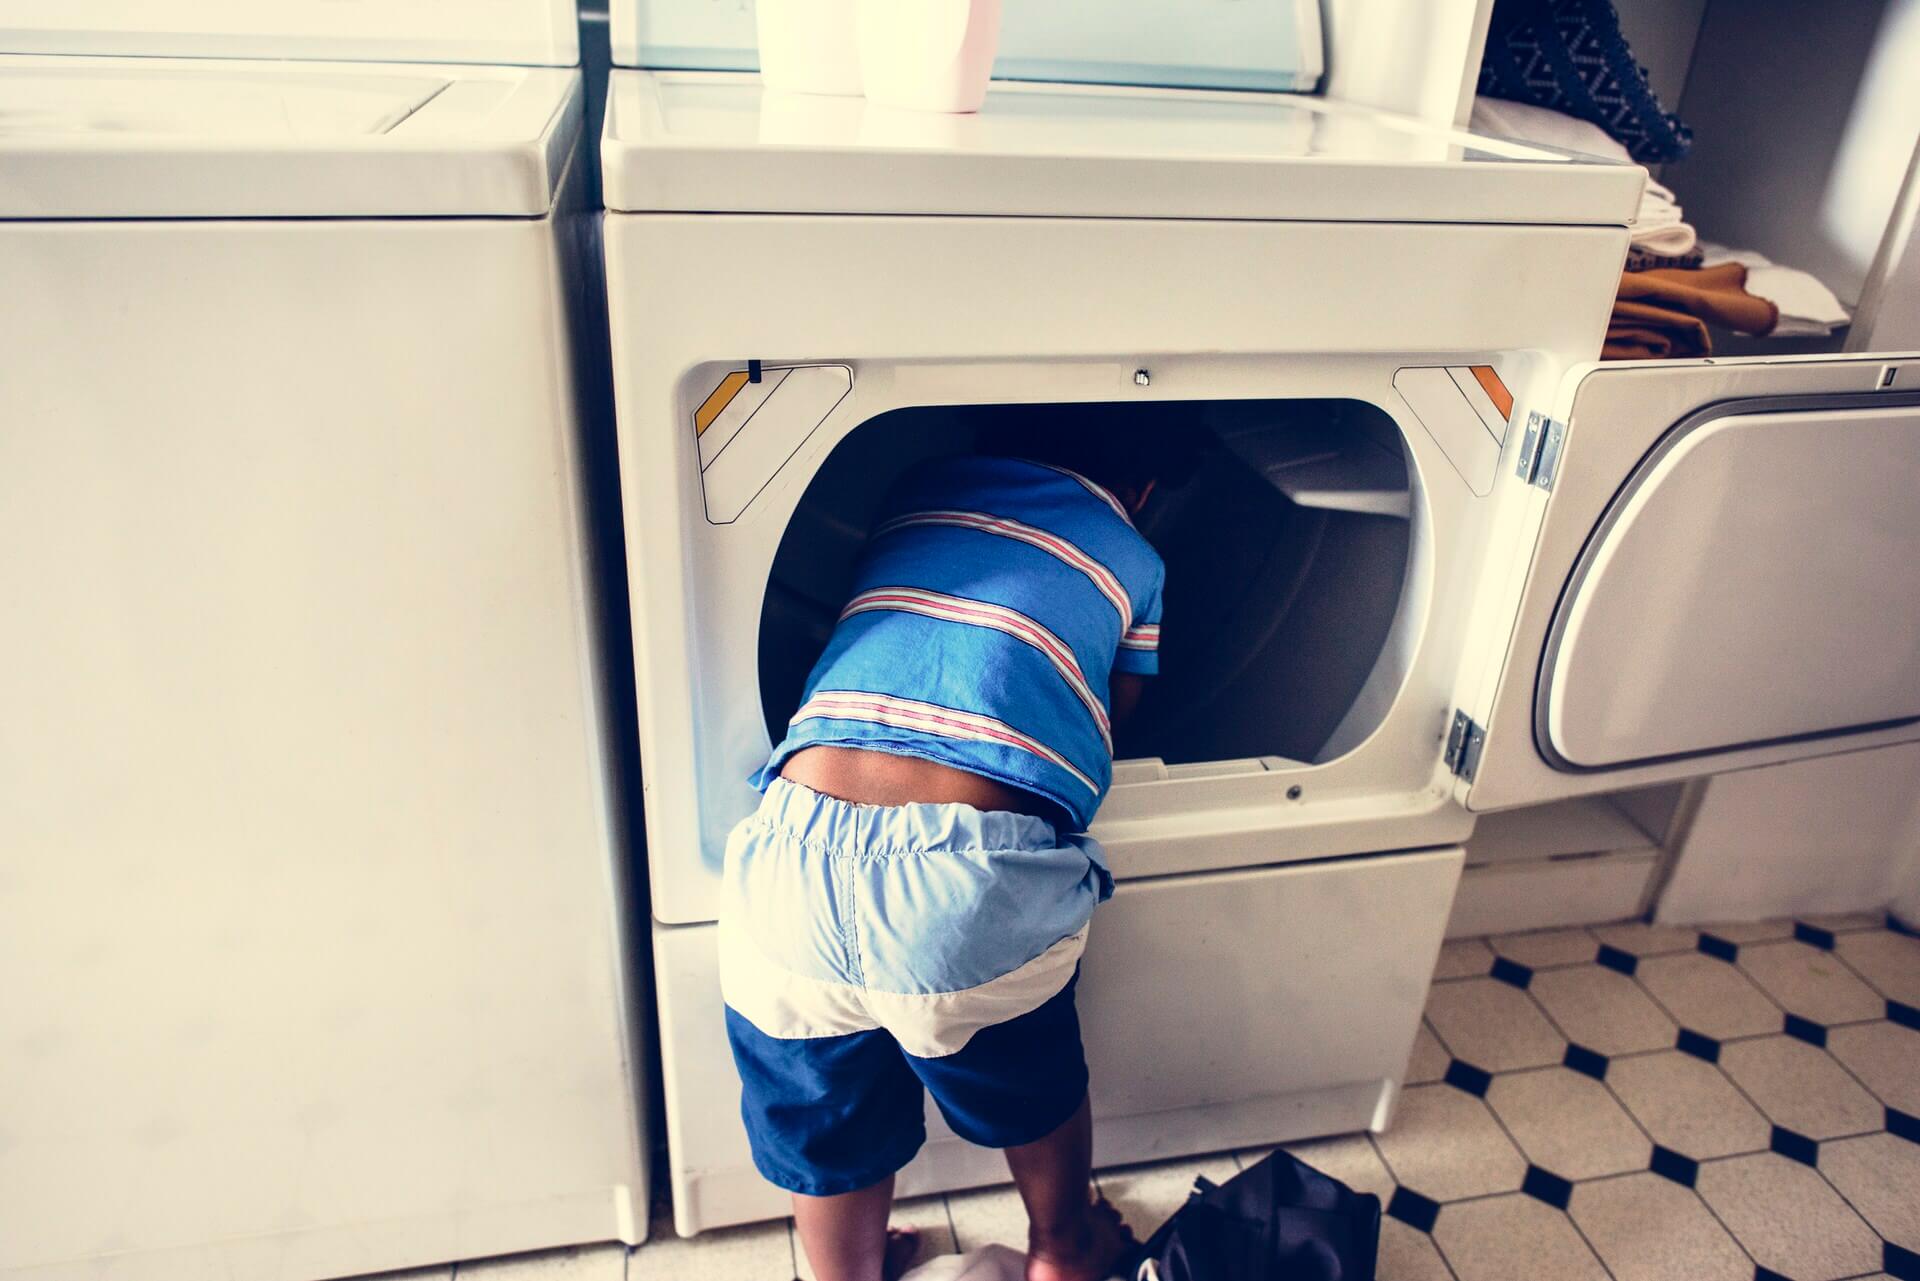 young boy sticking head inside dryer